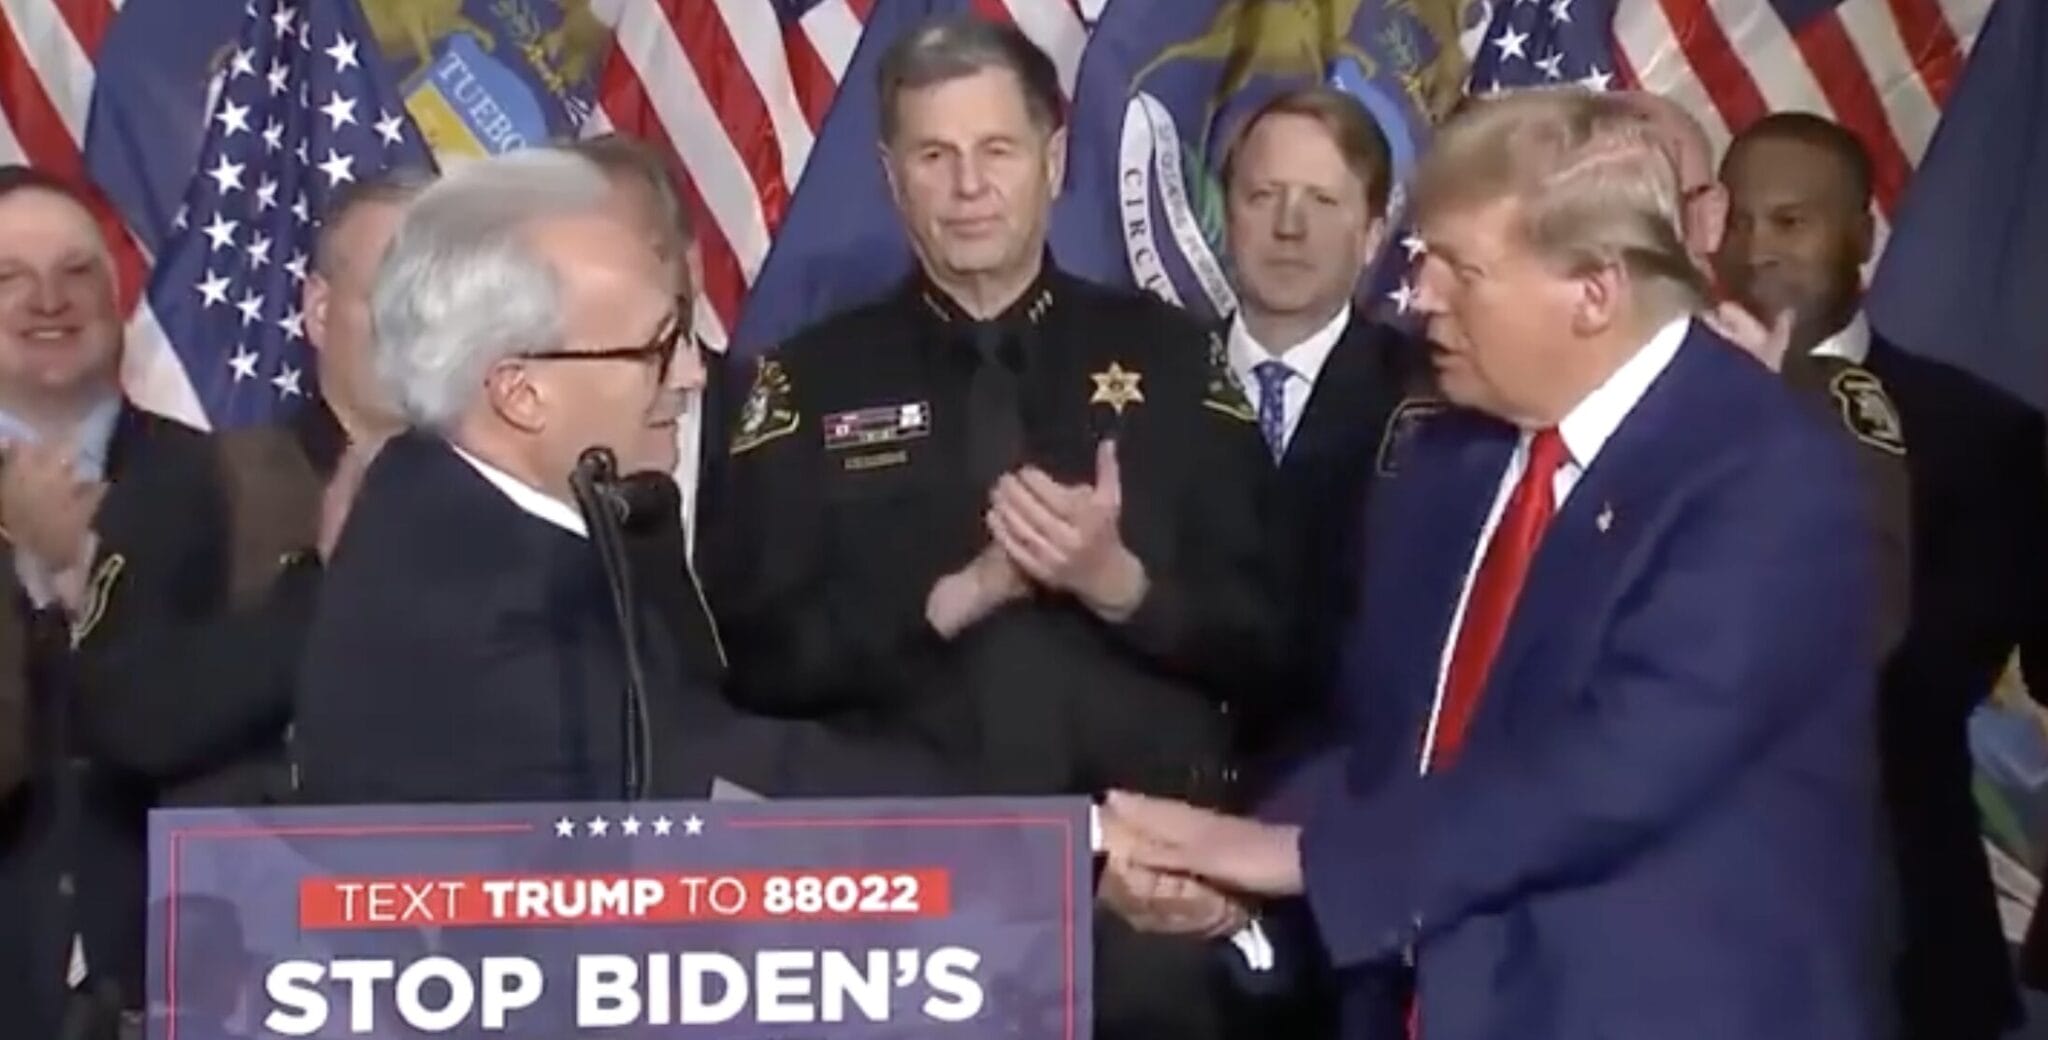 POAM President Jim Tignanelli shaking hands with Donald Trump